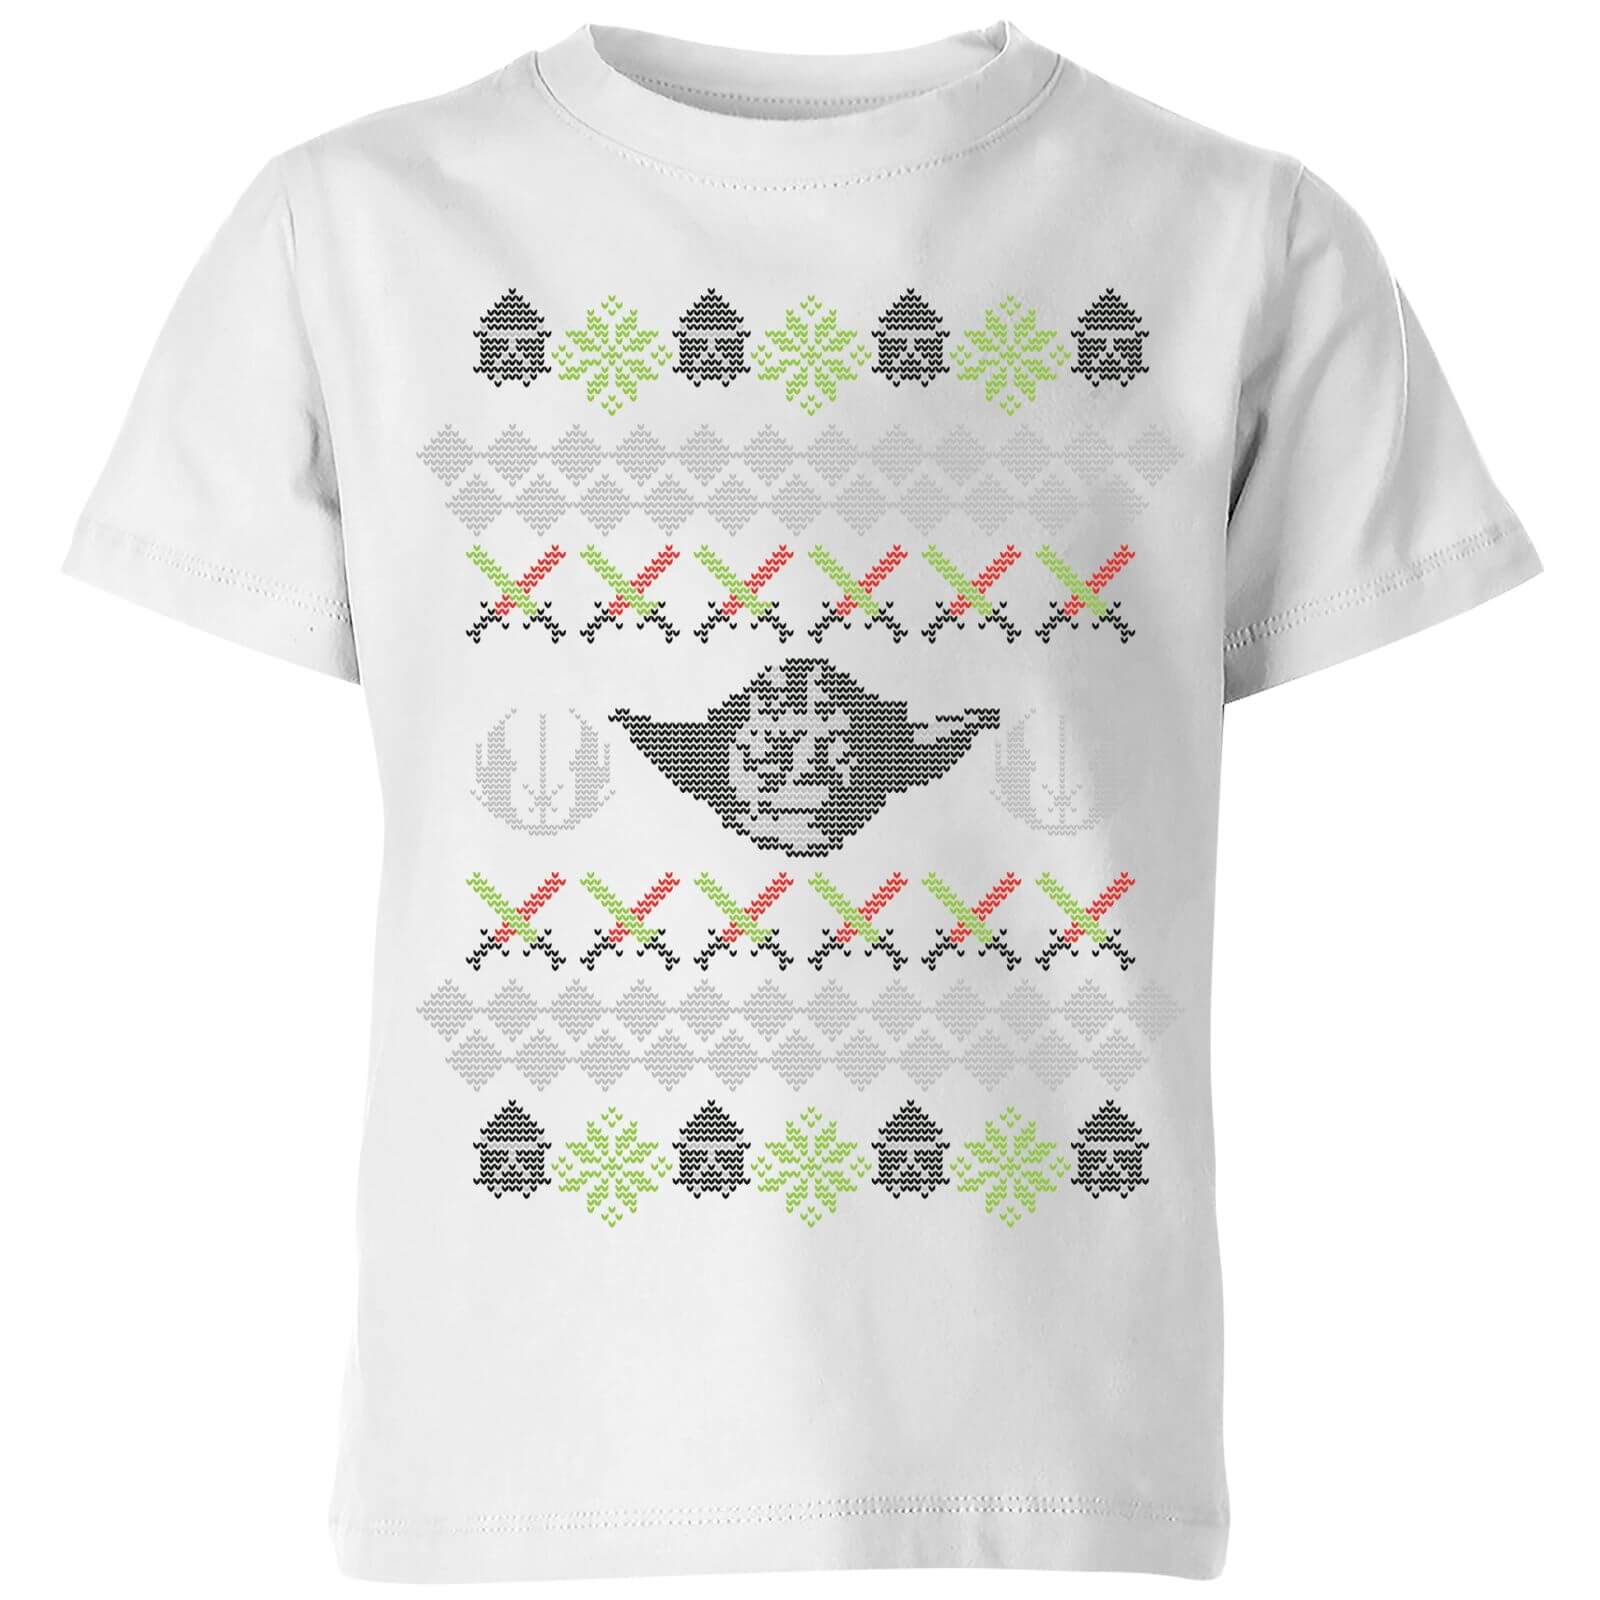 Star Wars Yoda Knit Kids' Christmas T-Shirt - White - 5-6 Jahre